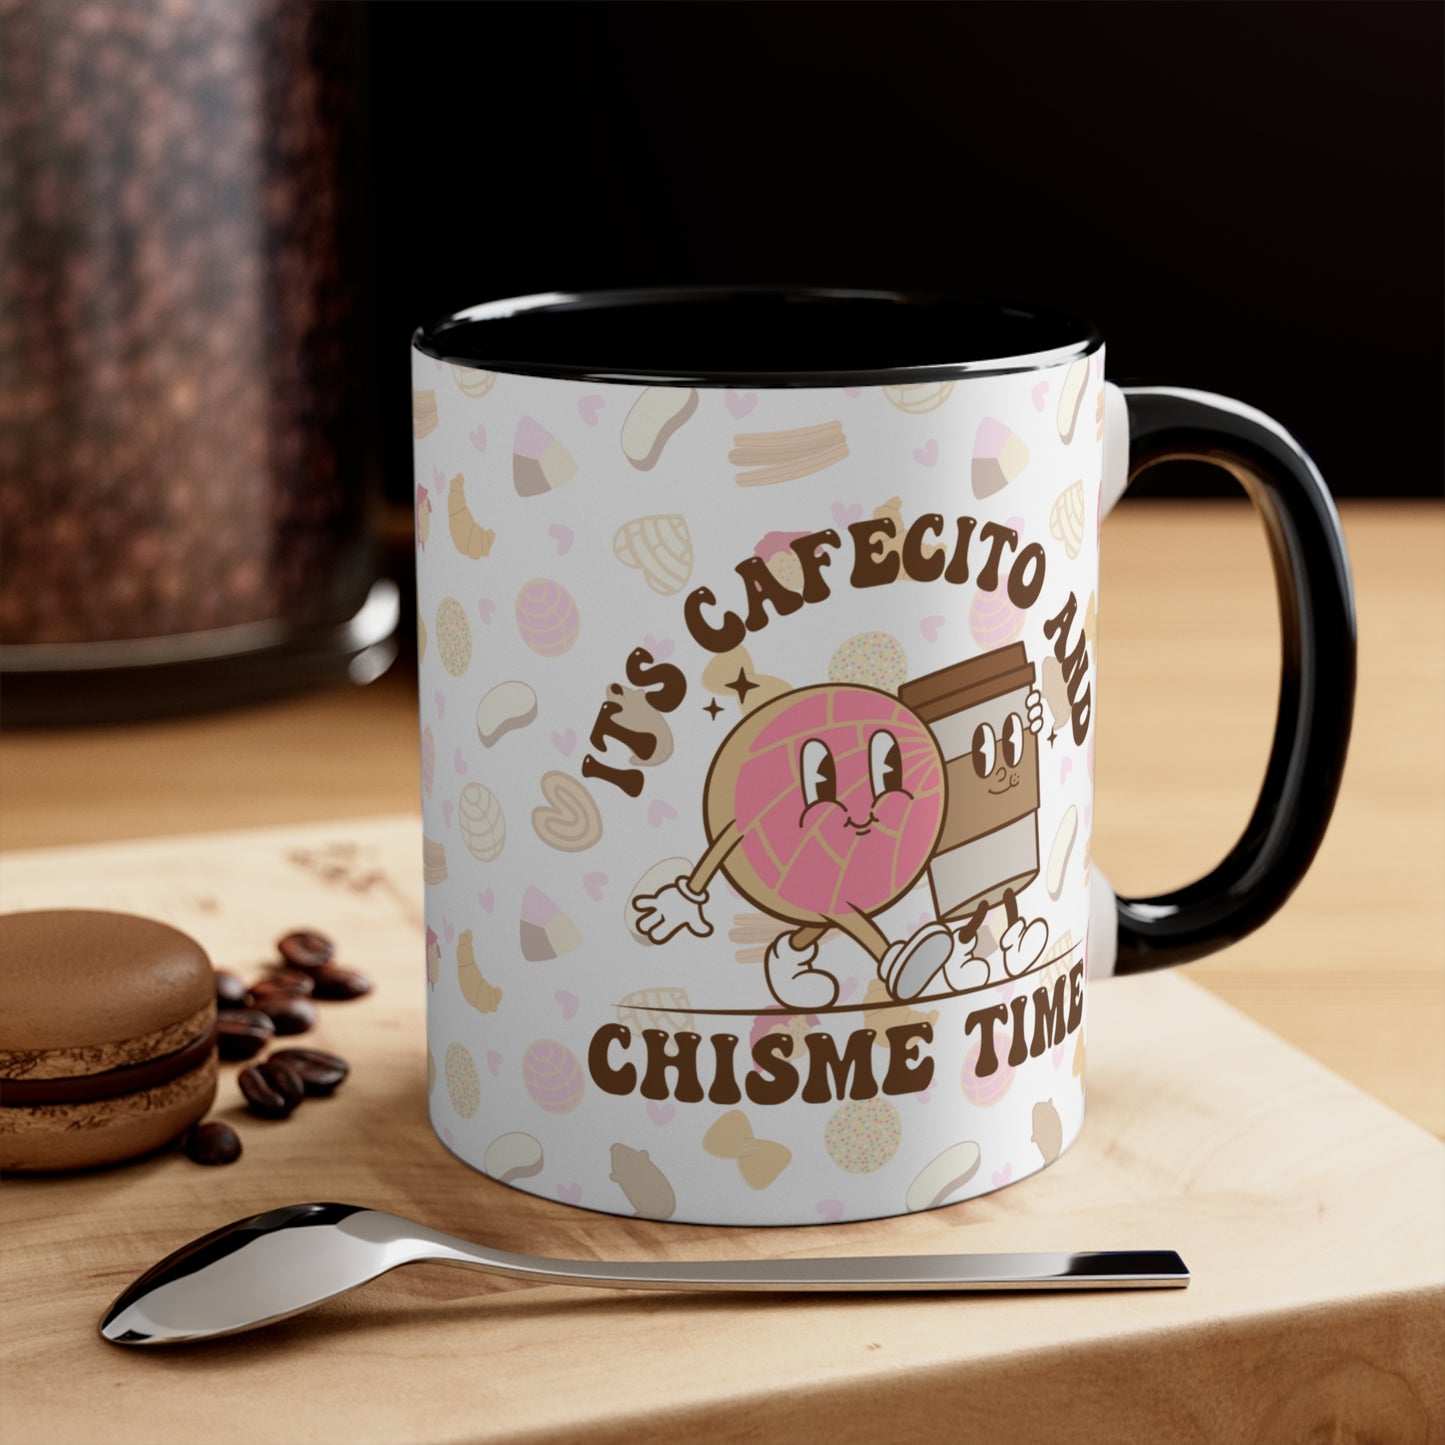 Cafecito y chisme time Coffee Mug, 11oz for Mexican and Latin friends. Concha coffee mug.